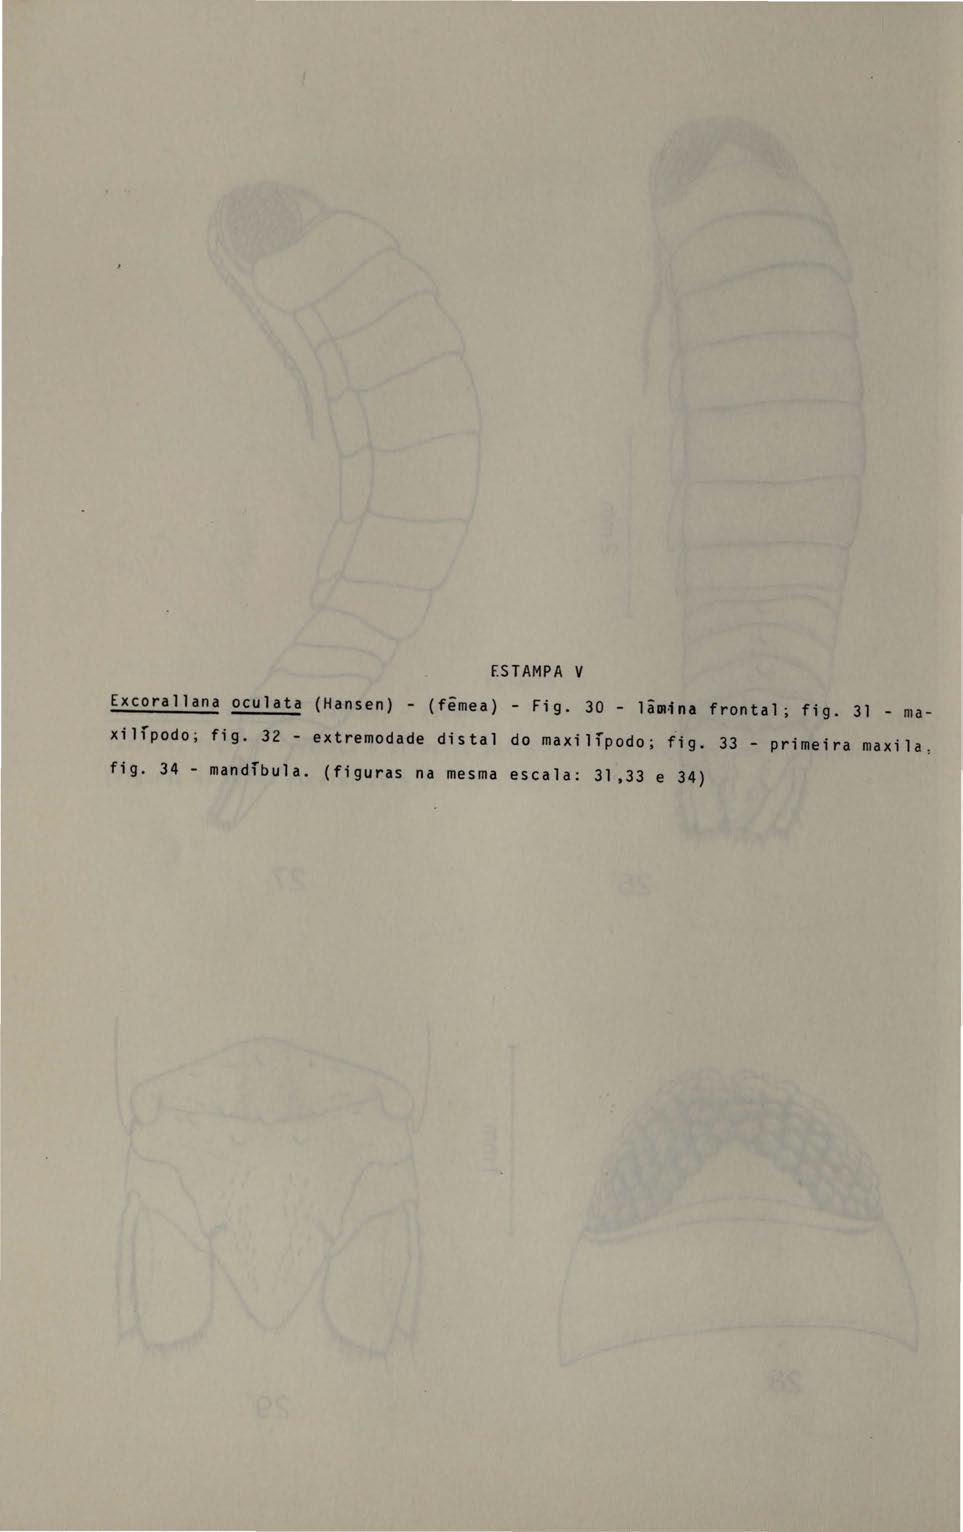 ESTAMPA V Excorallana oculata (Hansen) - (fêmea) - Fig. 30 - lâdl ina frontal; fig. 31 - maxilfpodo; fig.